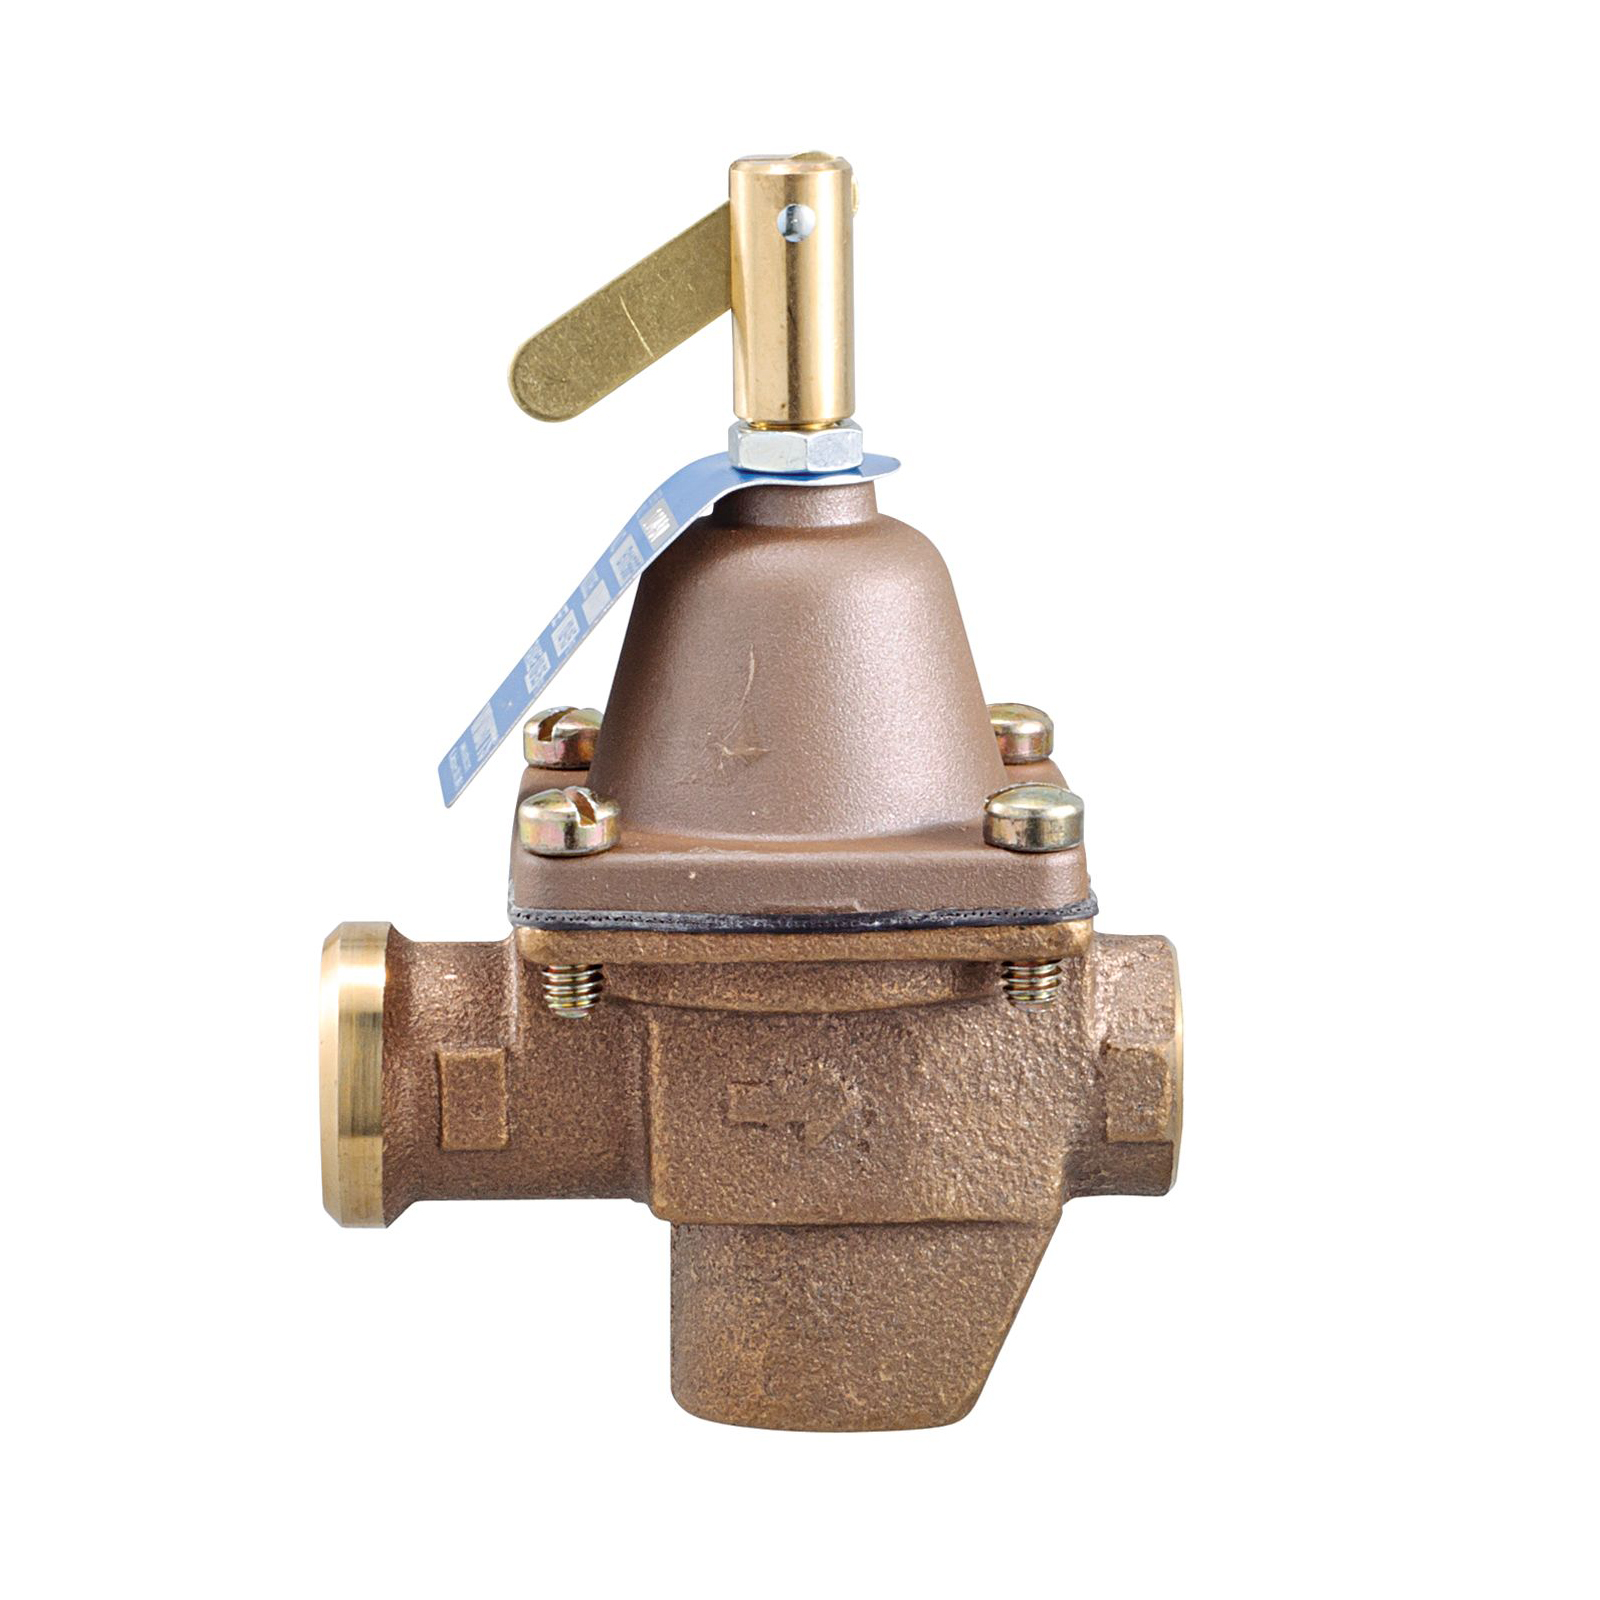 WATTS® 0386423 1156 Water Pressure Regulator, 1/2 in Nominal, Union Solder Inlet End Style, 100 psi Pressure, Bronze Body, Domestic